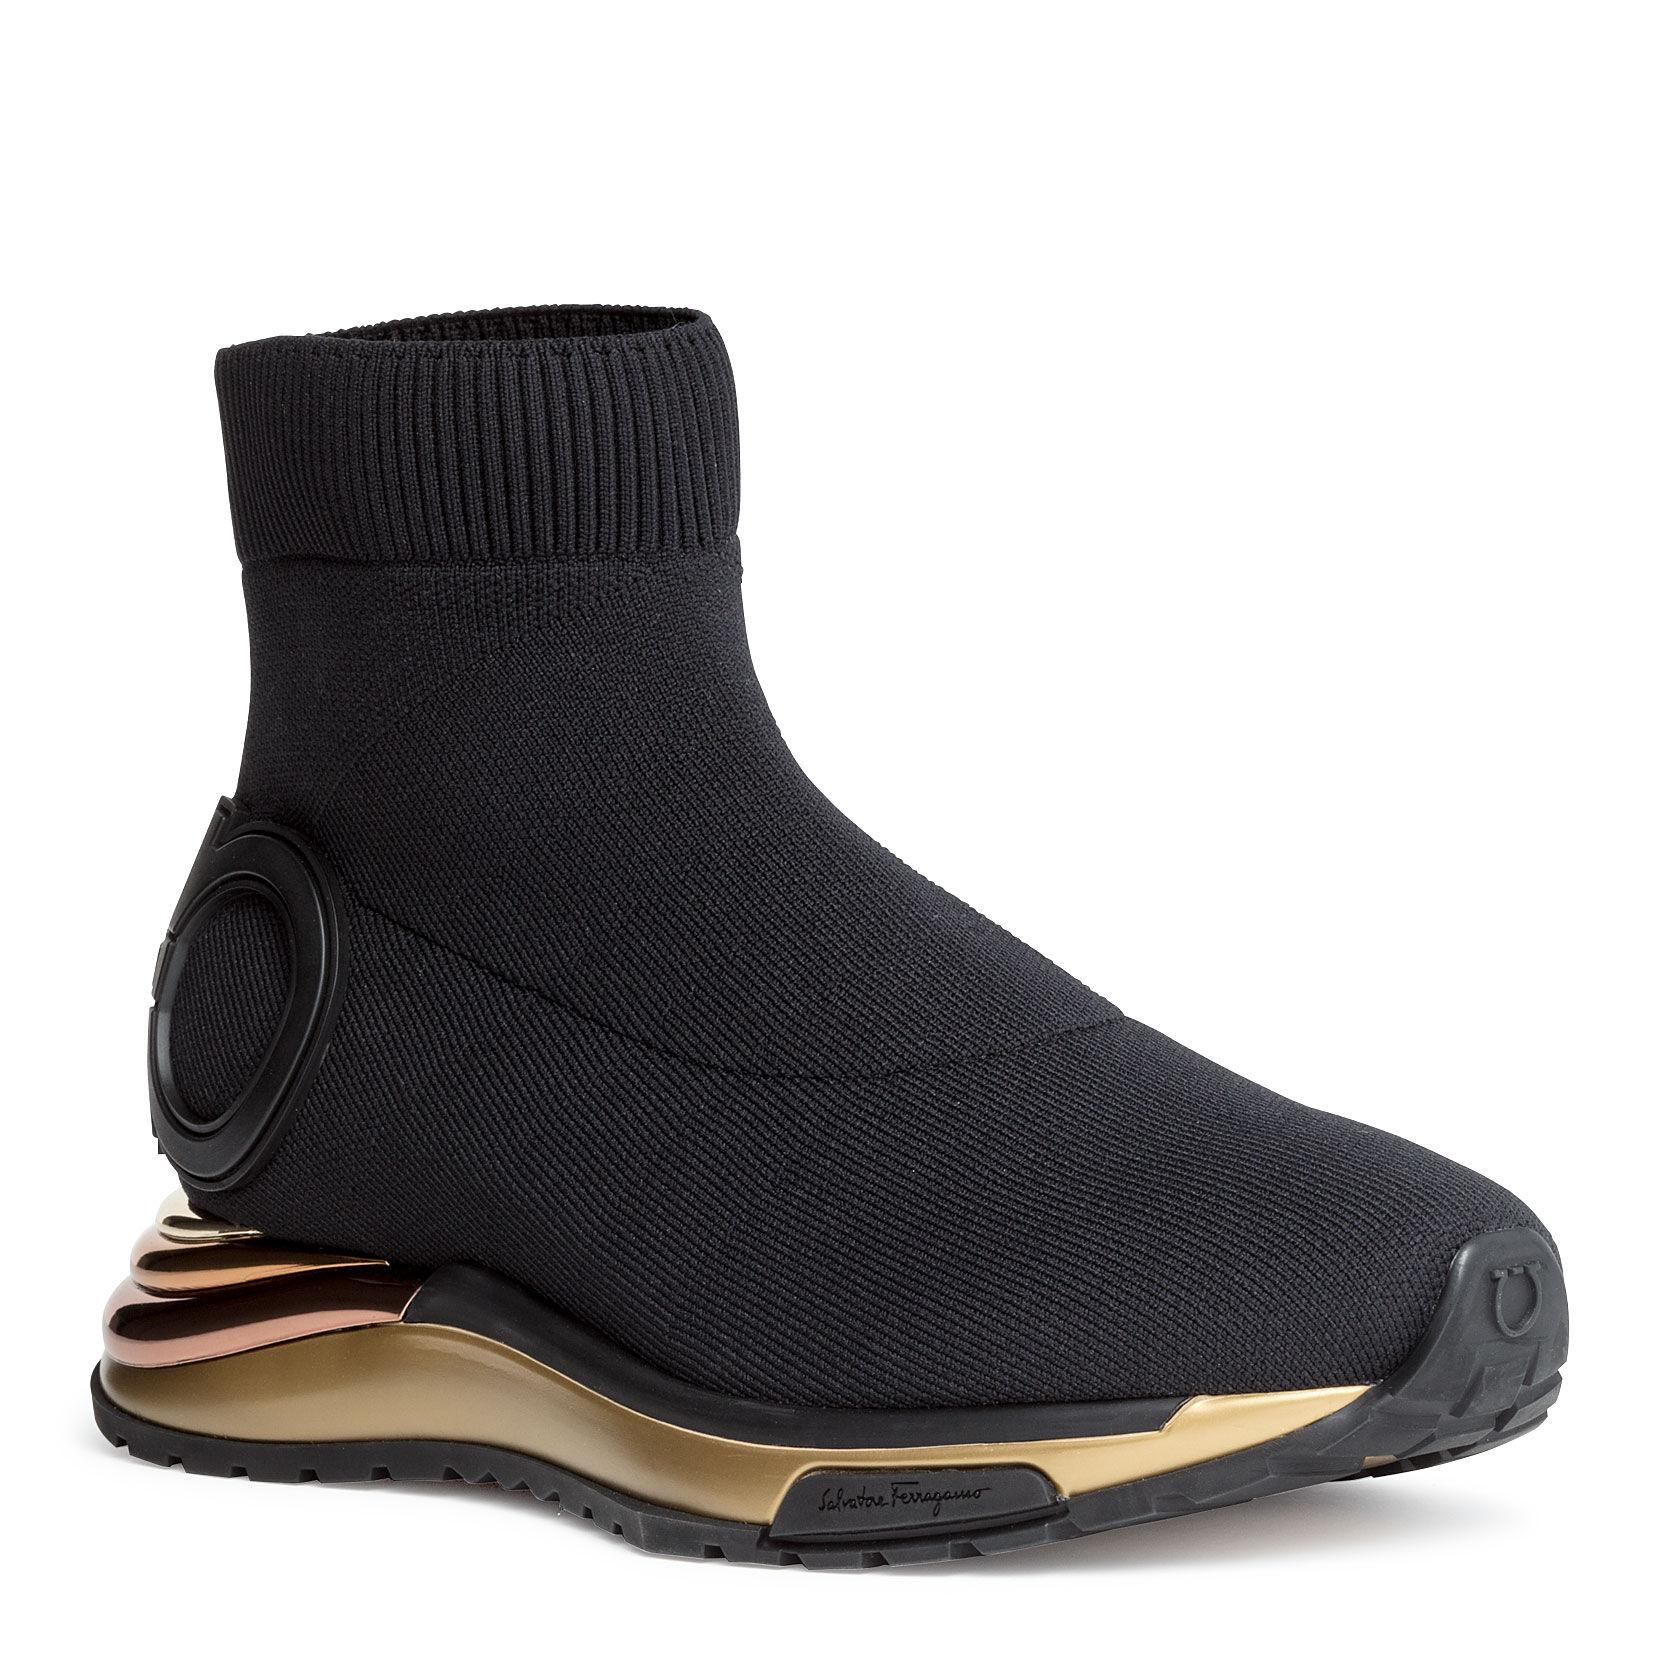 Ferragamo Leather Gancini Sneaker in Black - Save 54% - Lyst